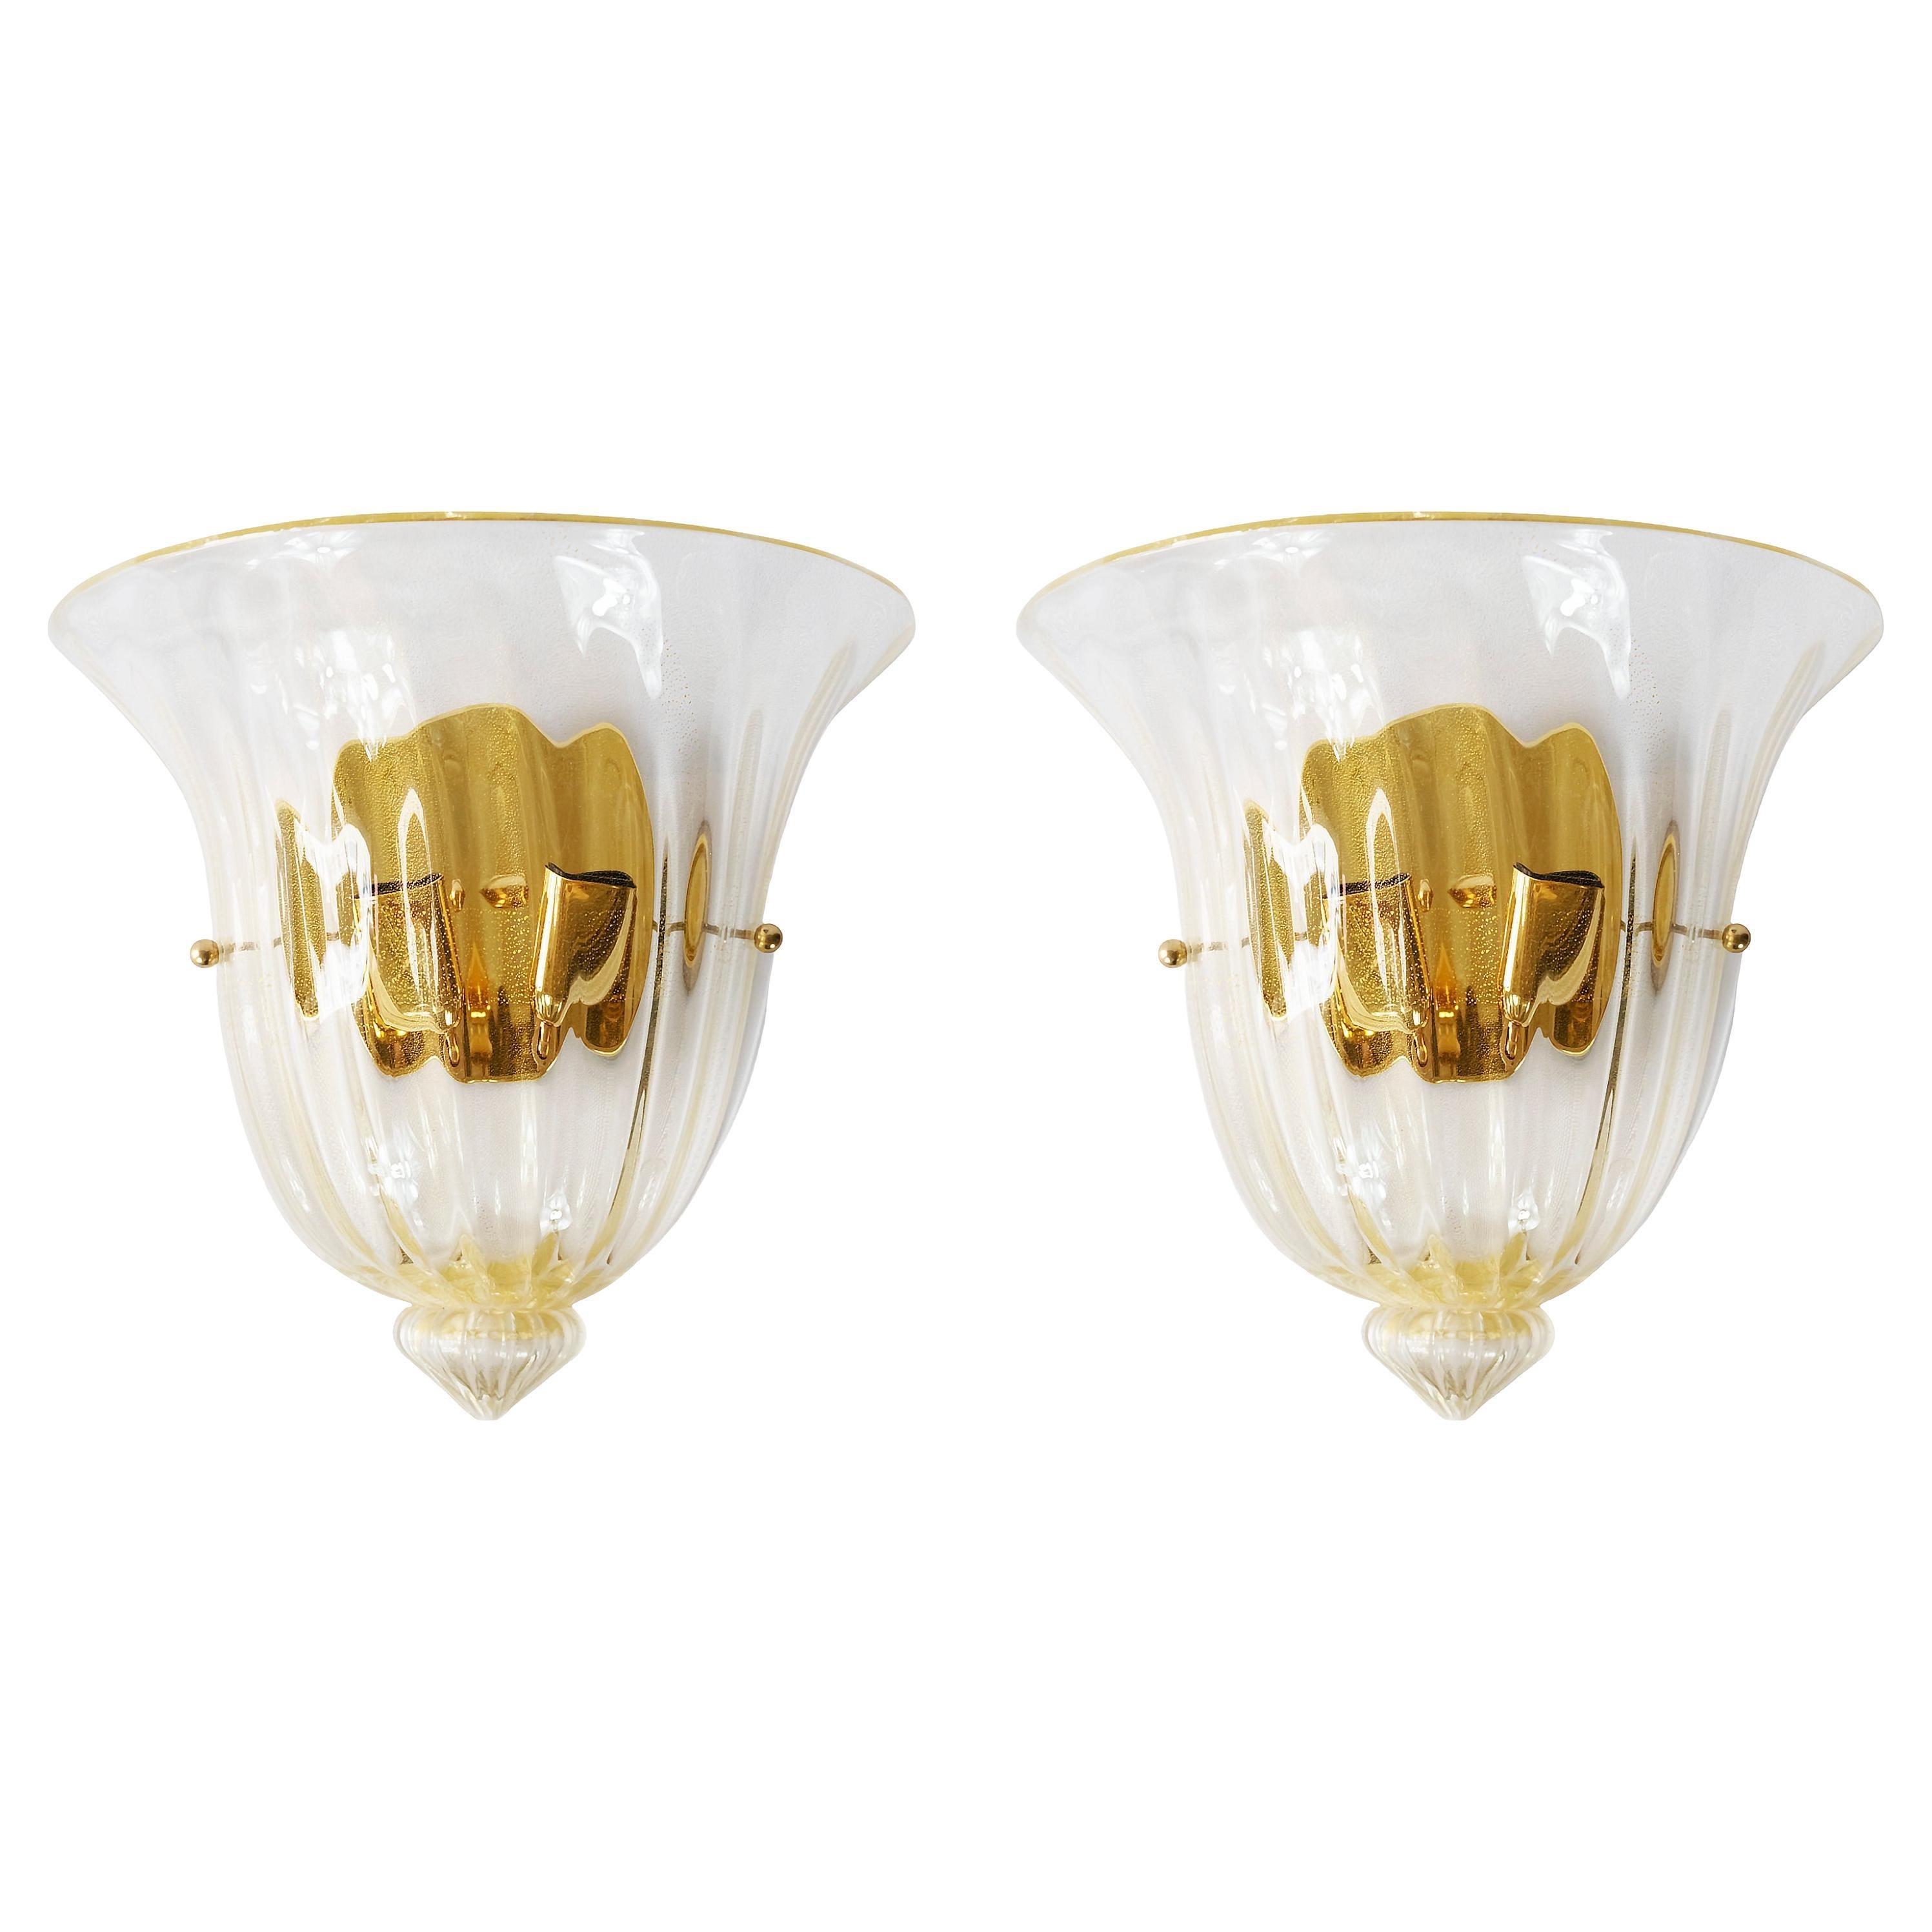 Pair of Italian Murano Glass and Brass Wall Light Sconces, circa 1970